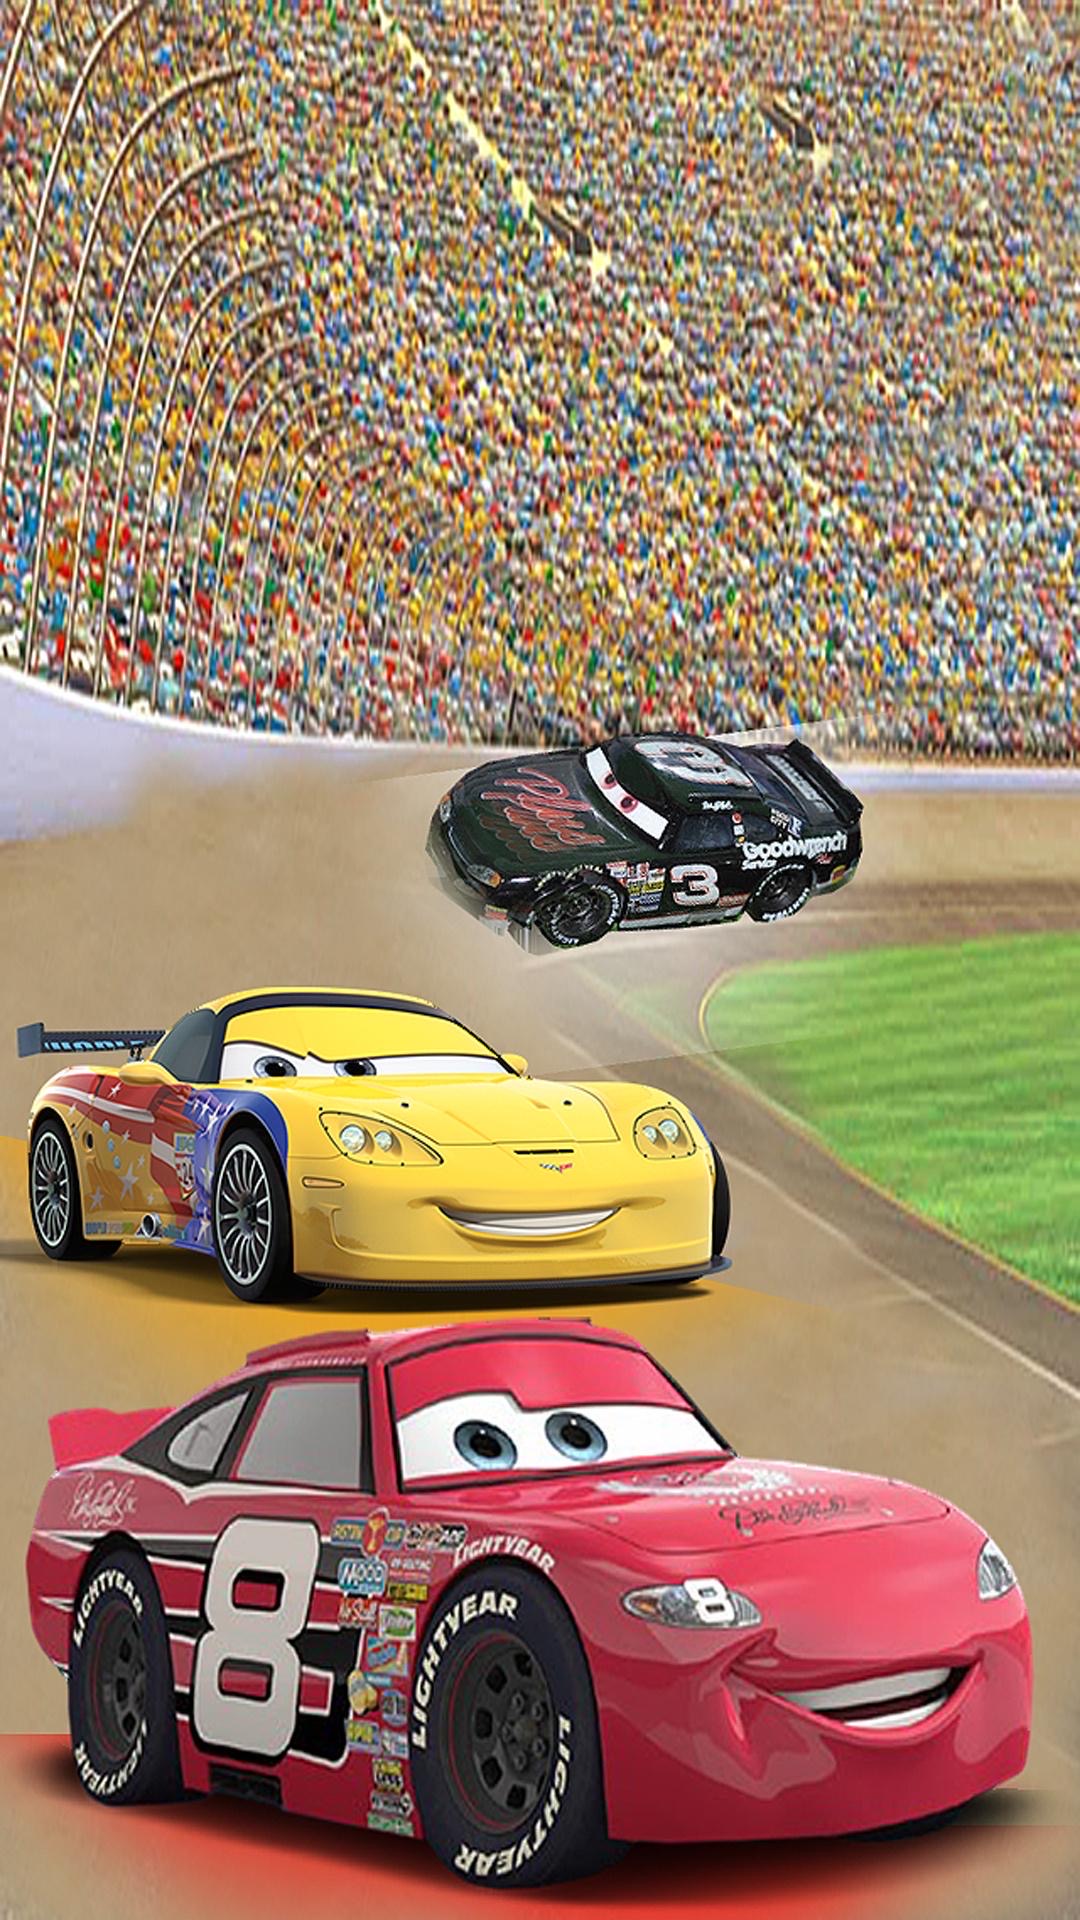 Cars racetrack iPhone wallpaper by LittleBigPlanet1234 on DeviantArt